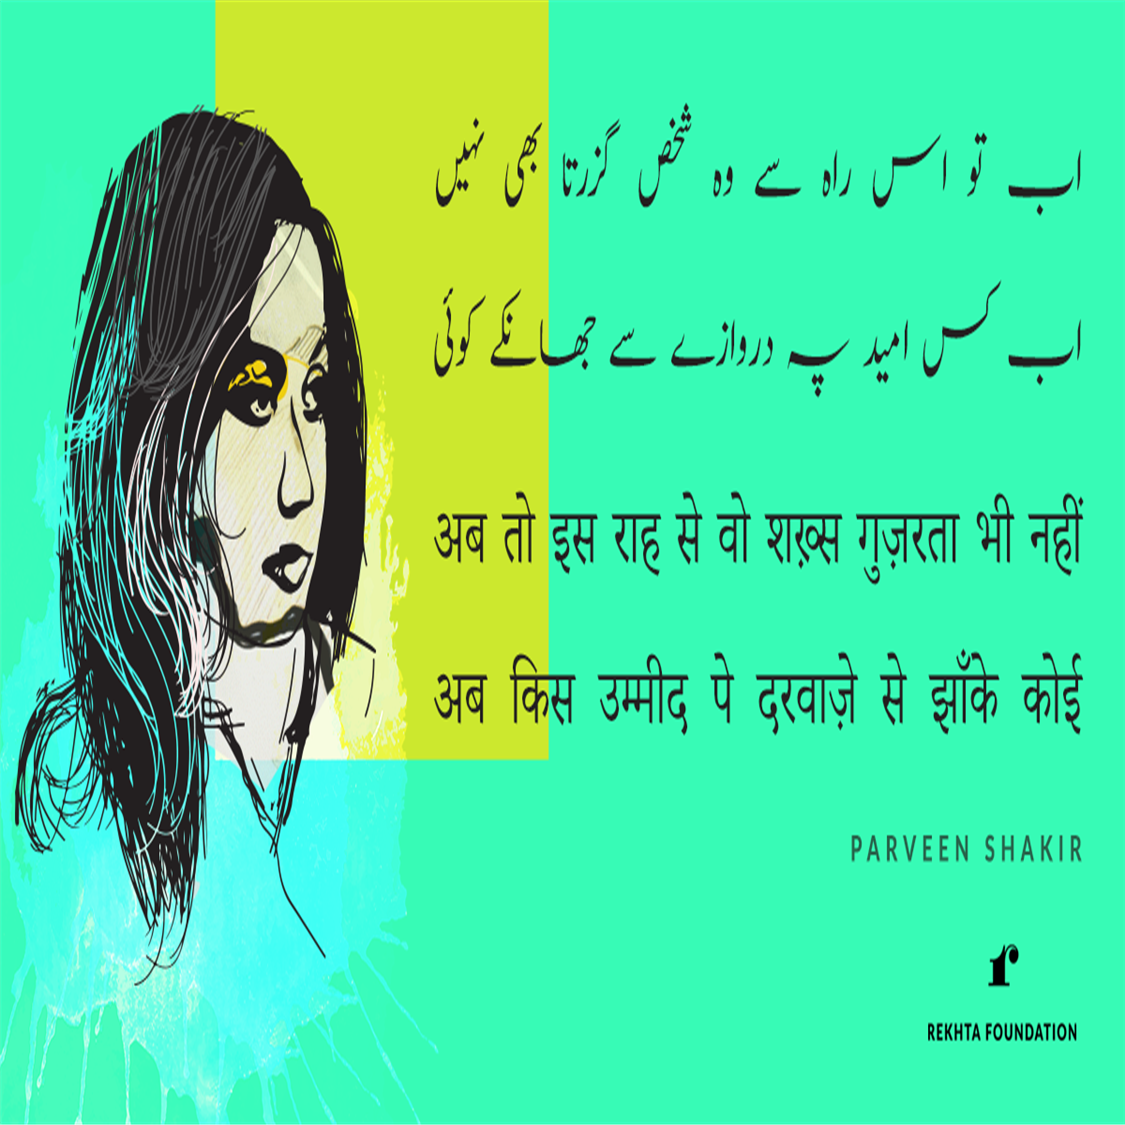 ab to is raah se vo shaKHs guzartaa bhii nahii.n-Parveen Shakir